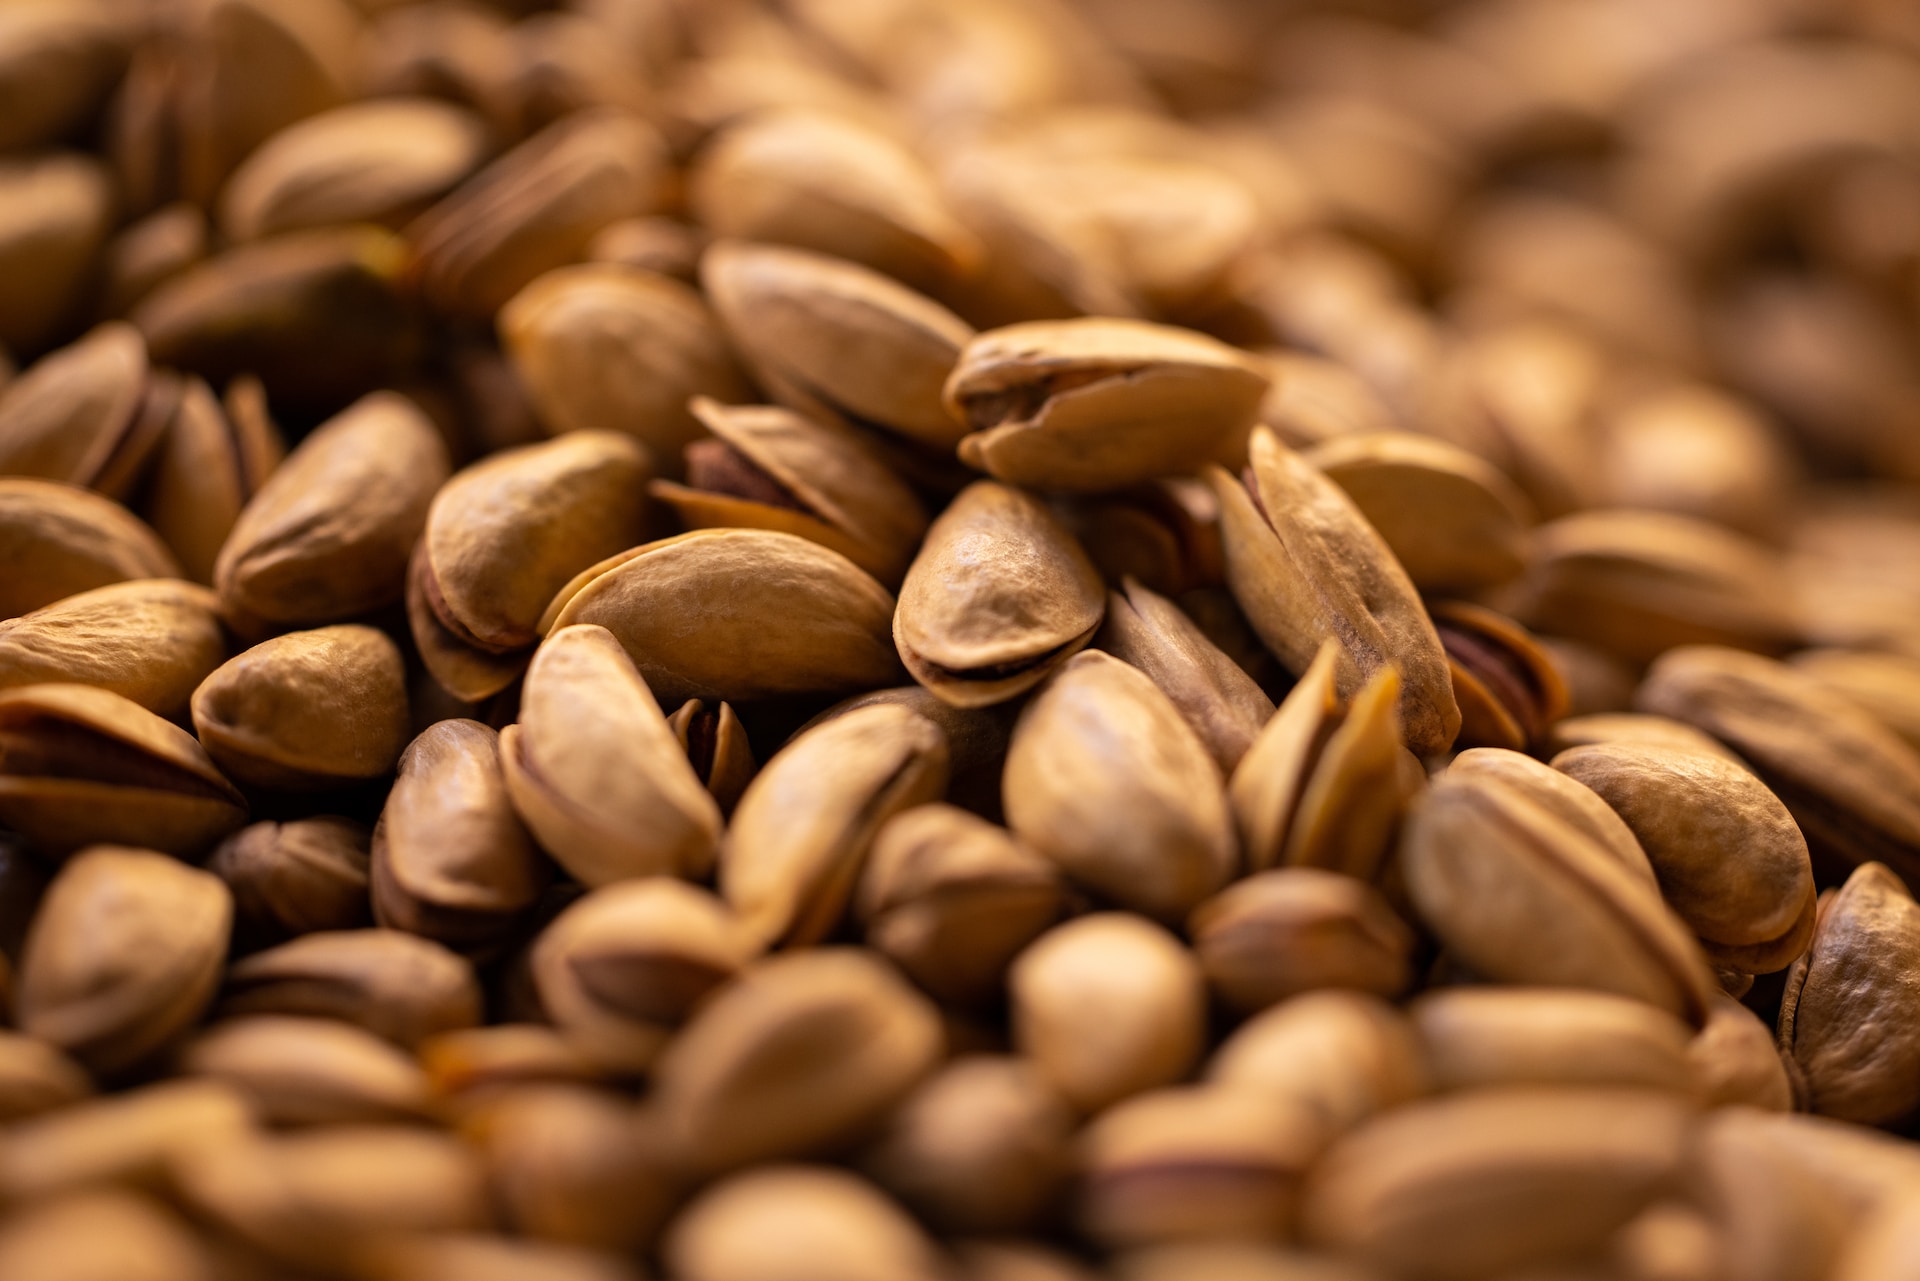 Segenggam Kacang-kacangan Terbukti Risiko Penyakit Jantung Berkurang, Fakta?